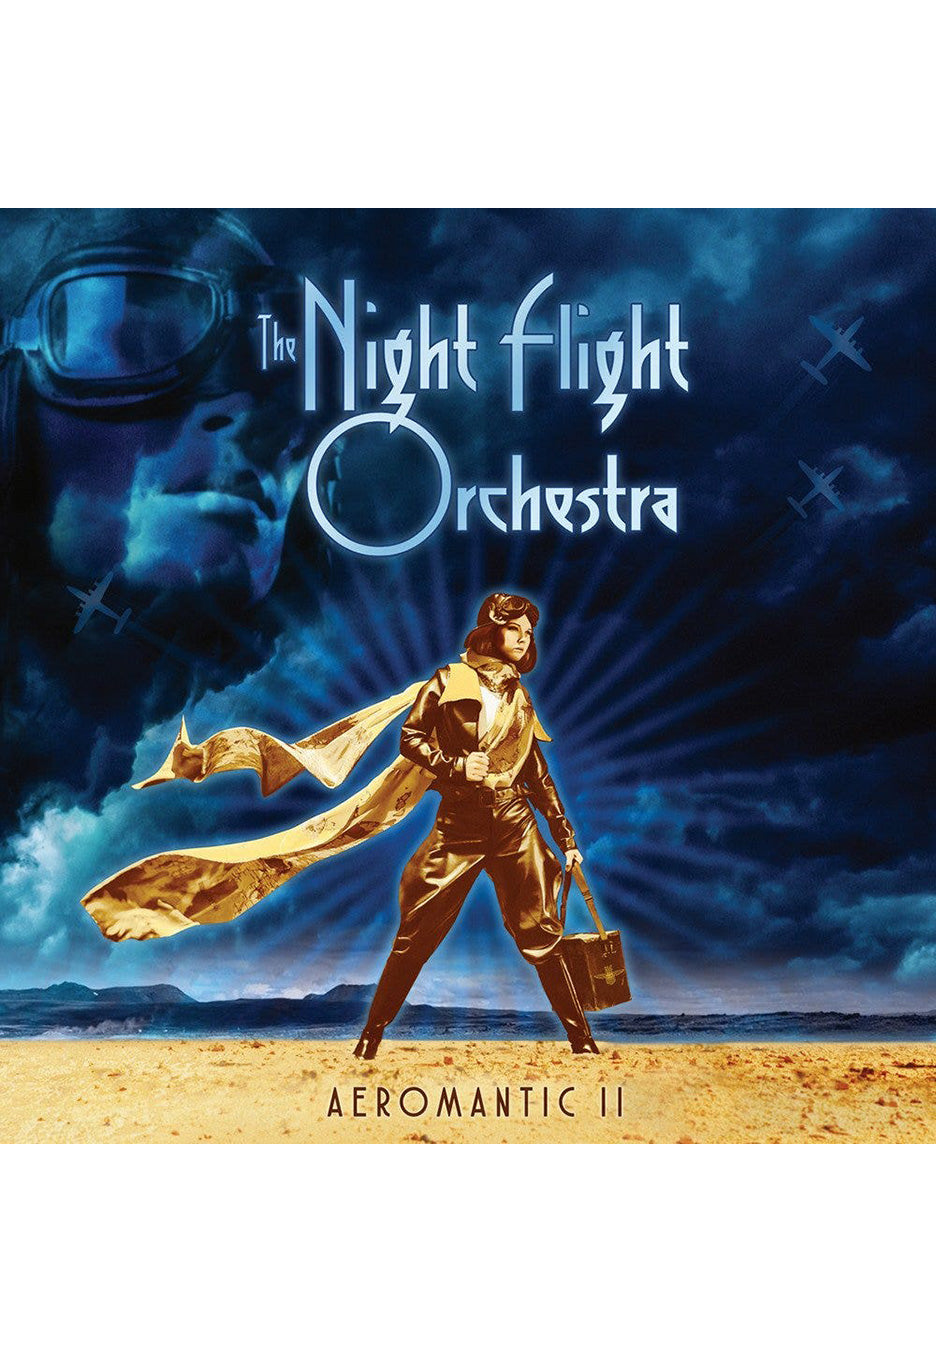 The Night Flight Orchestra - Aeromantic II Clear - Colored 2 Vinyl